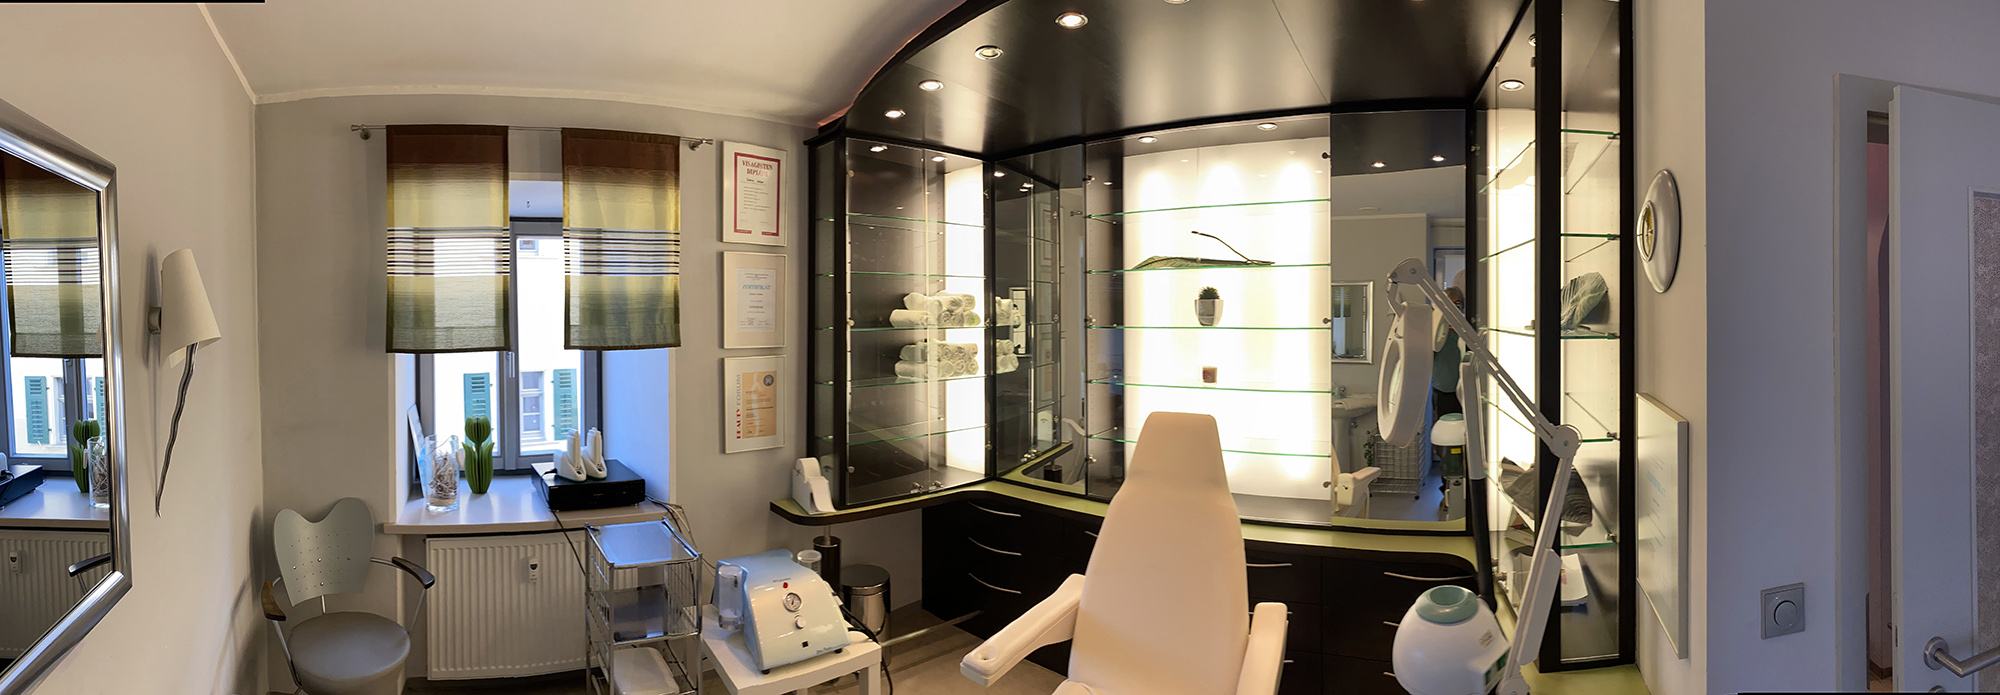 Möbeldesign | Kosmetikstudio | Salon Pecher MAK